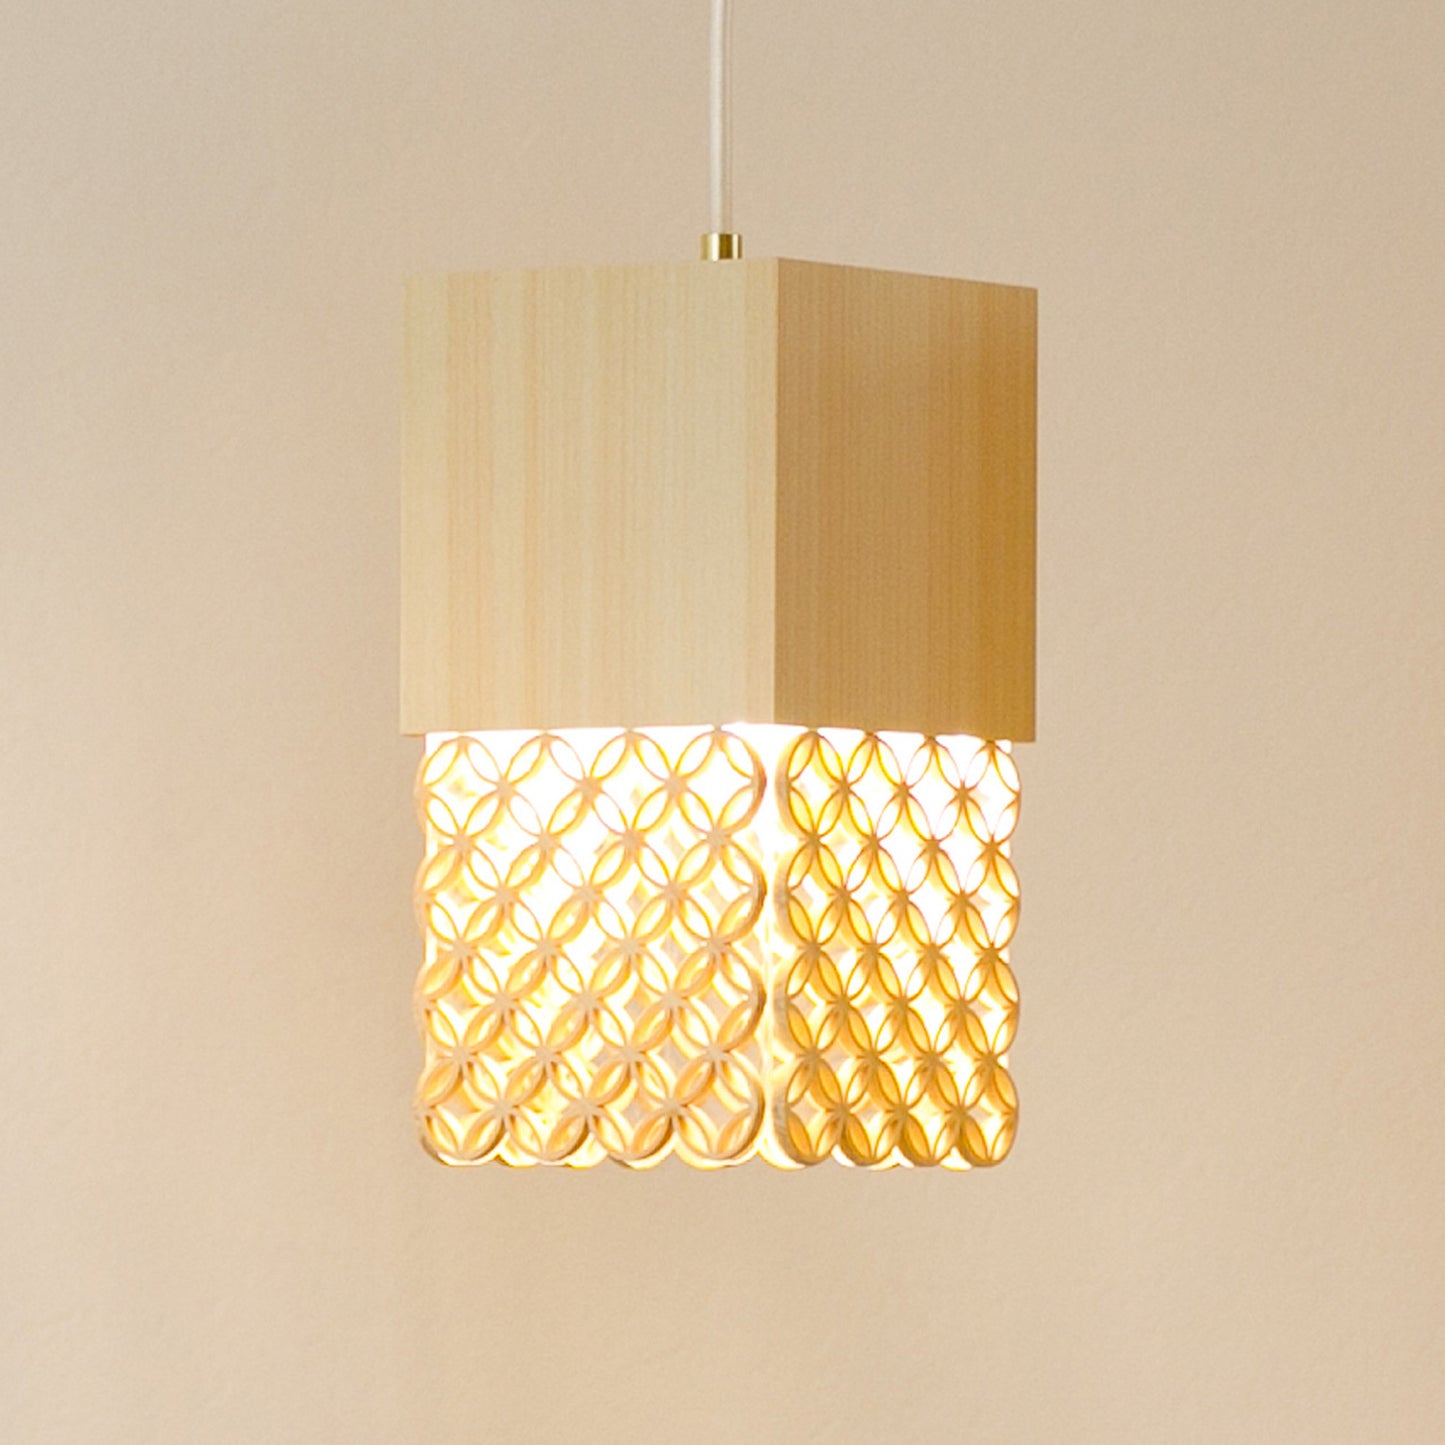 Hanakumiko pendant light lampshade (4 rows)